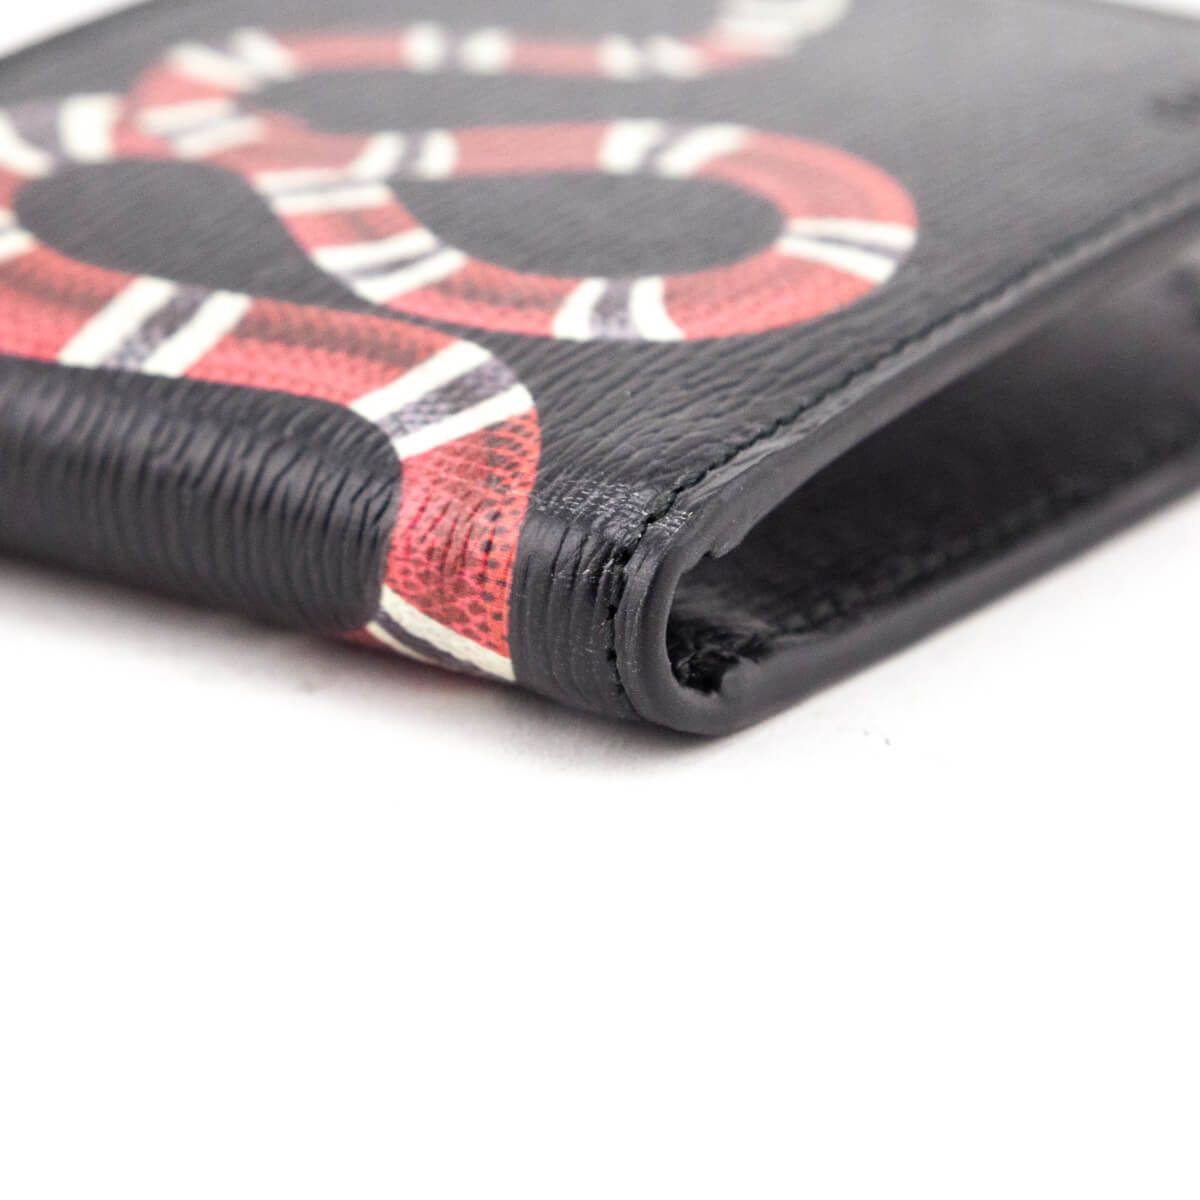 Gucci Black Leather Kingsnake Print Bi-fold Wallet - Gucci Canada